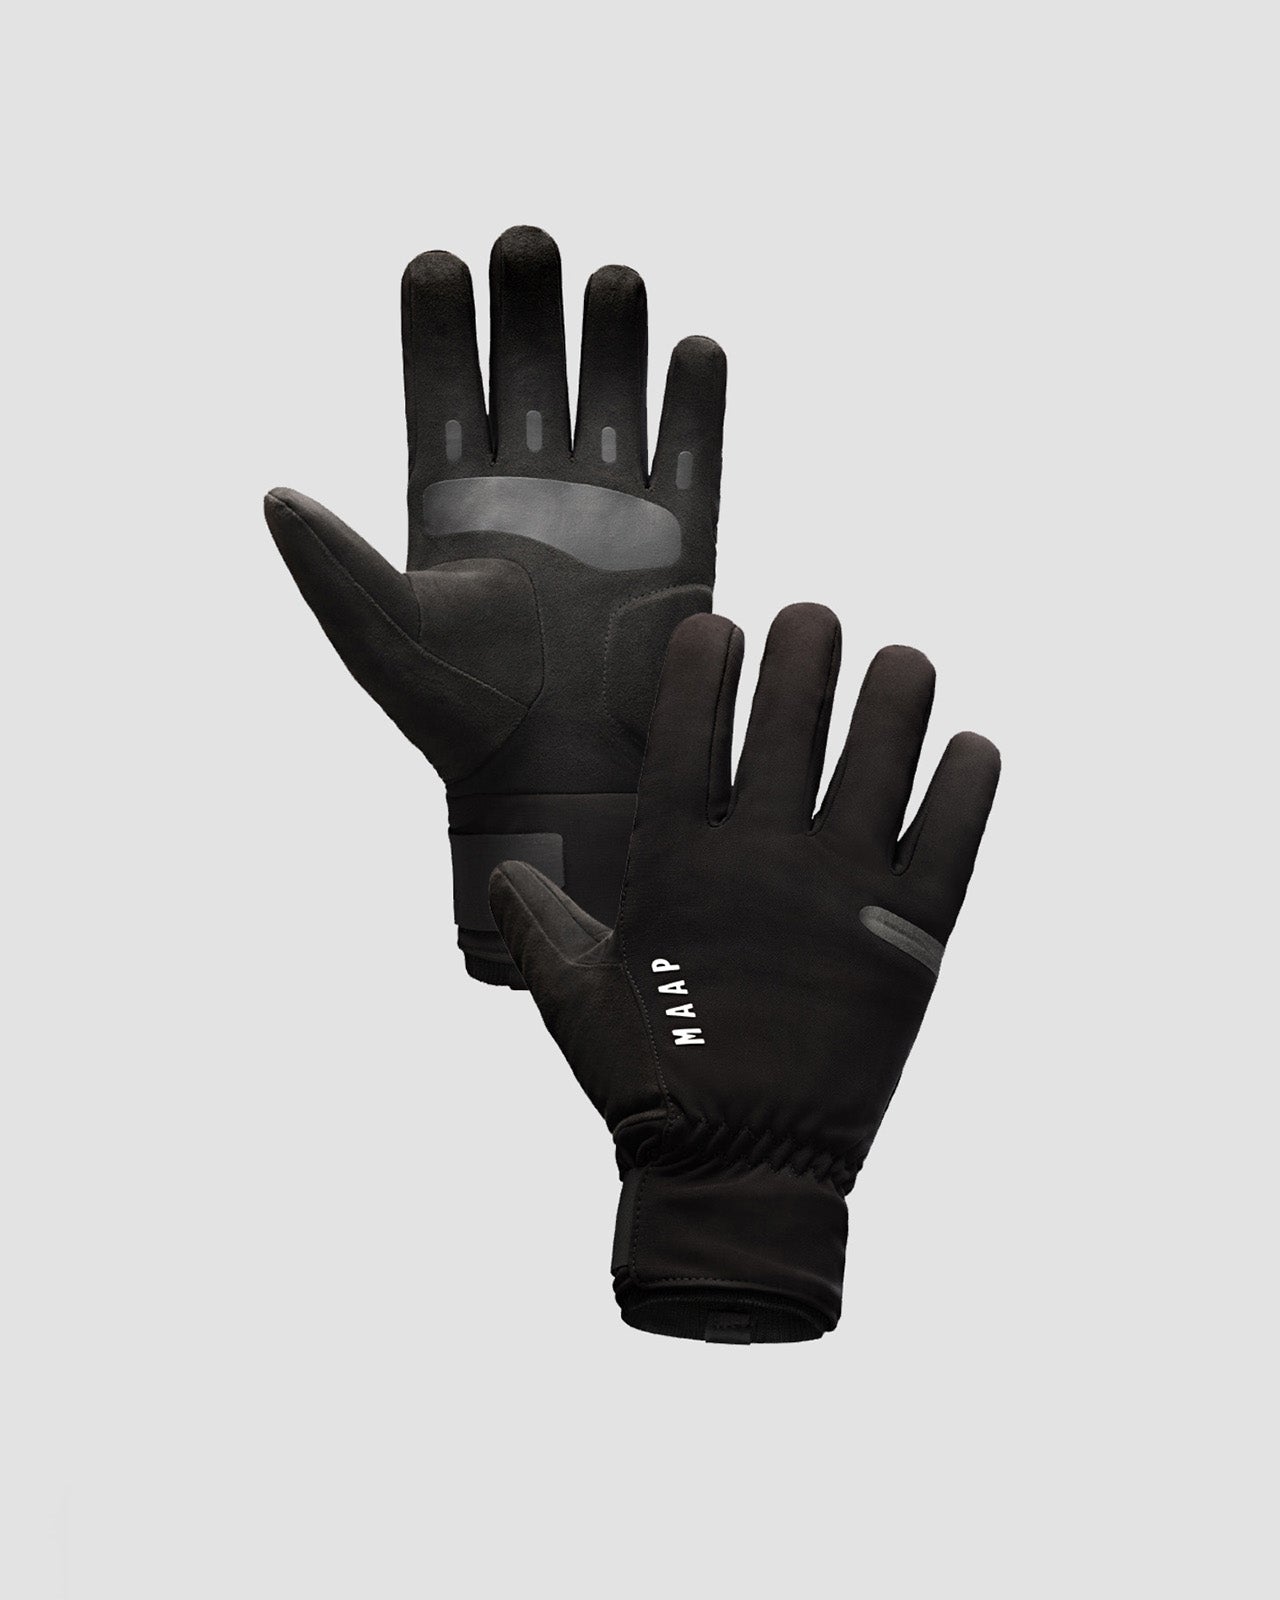 Apex Merino Glove